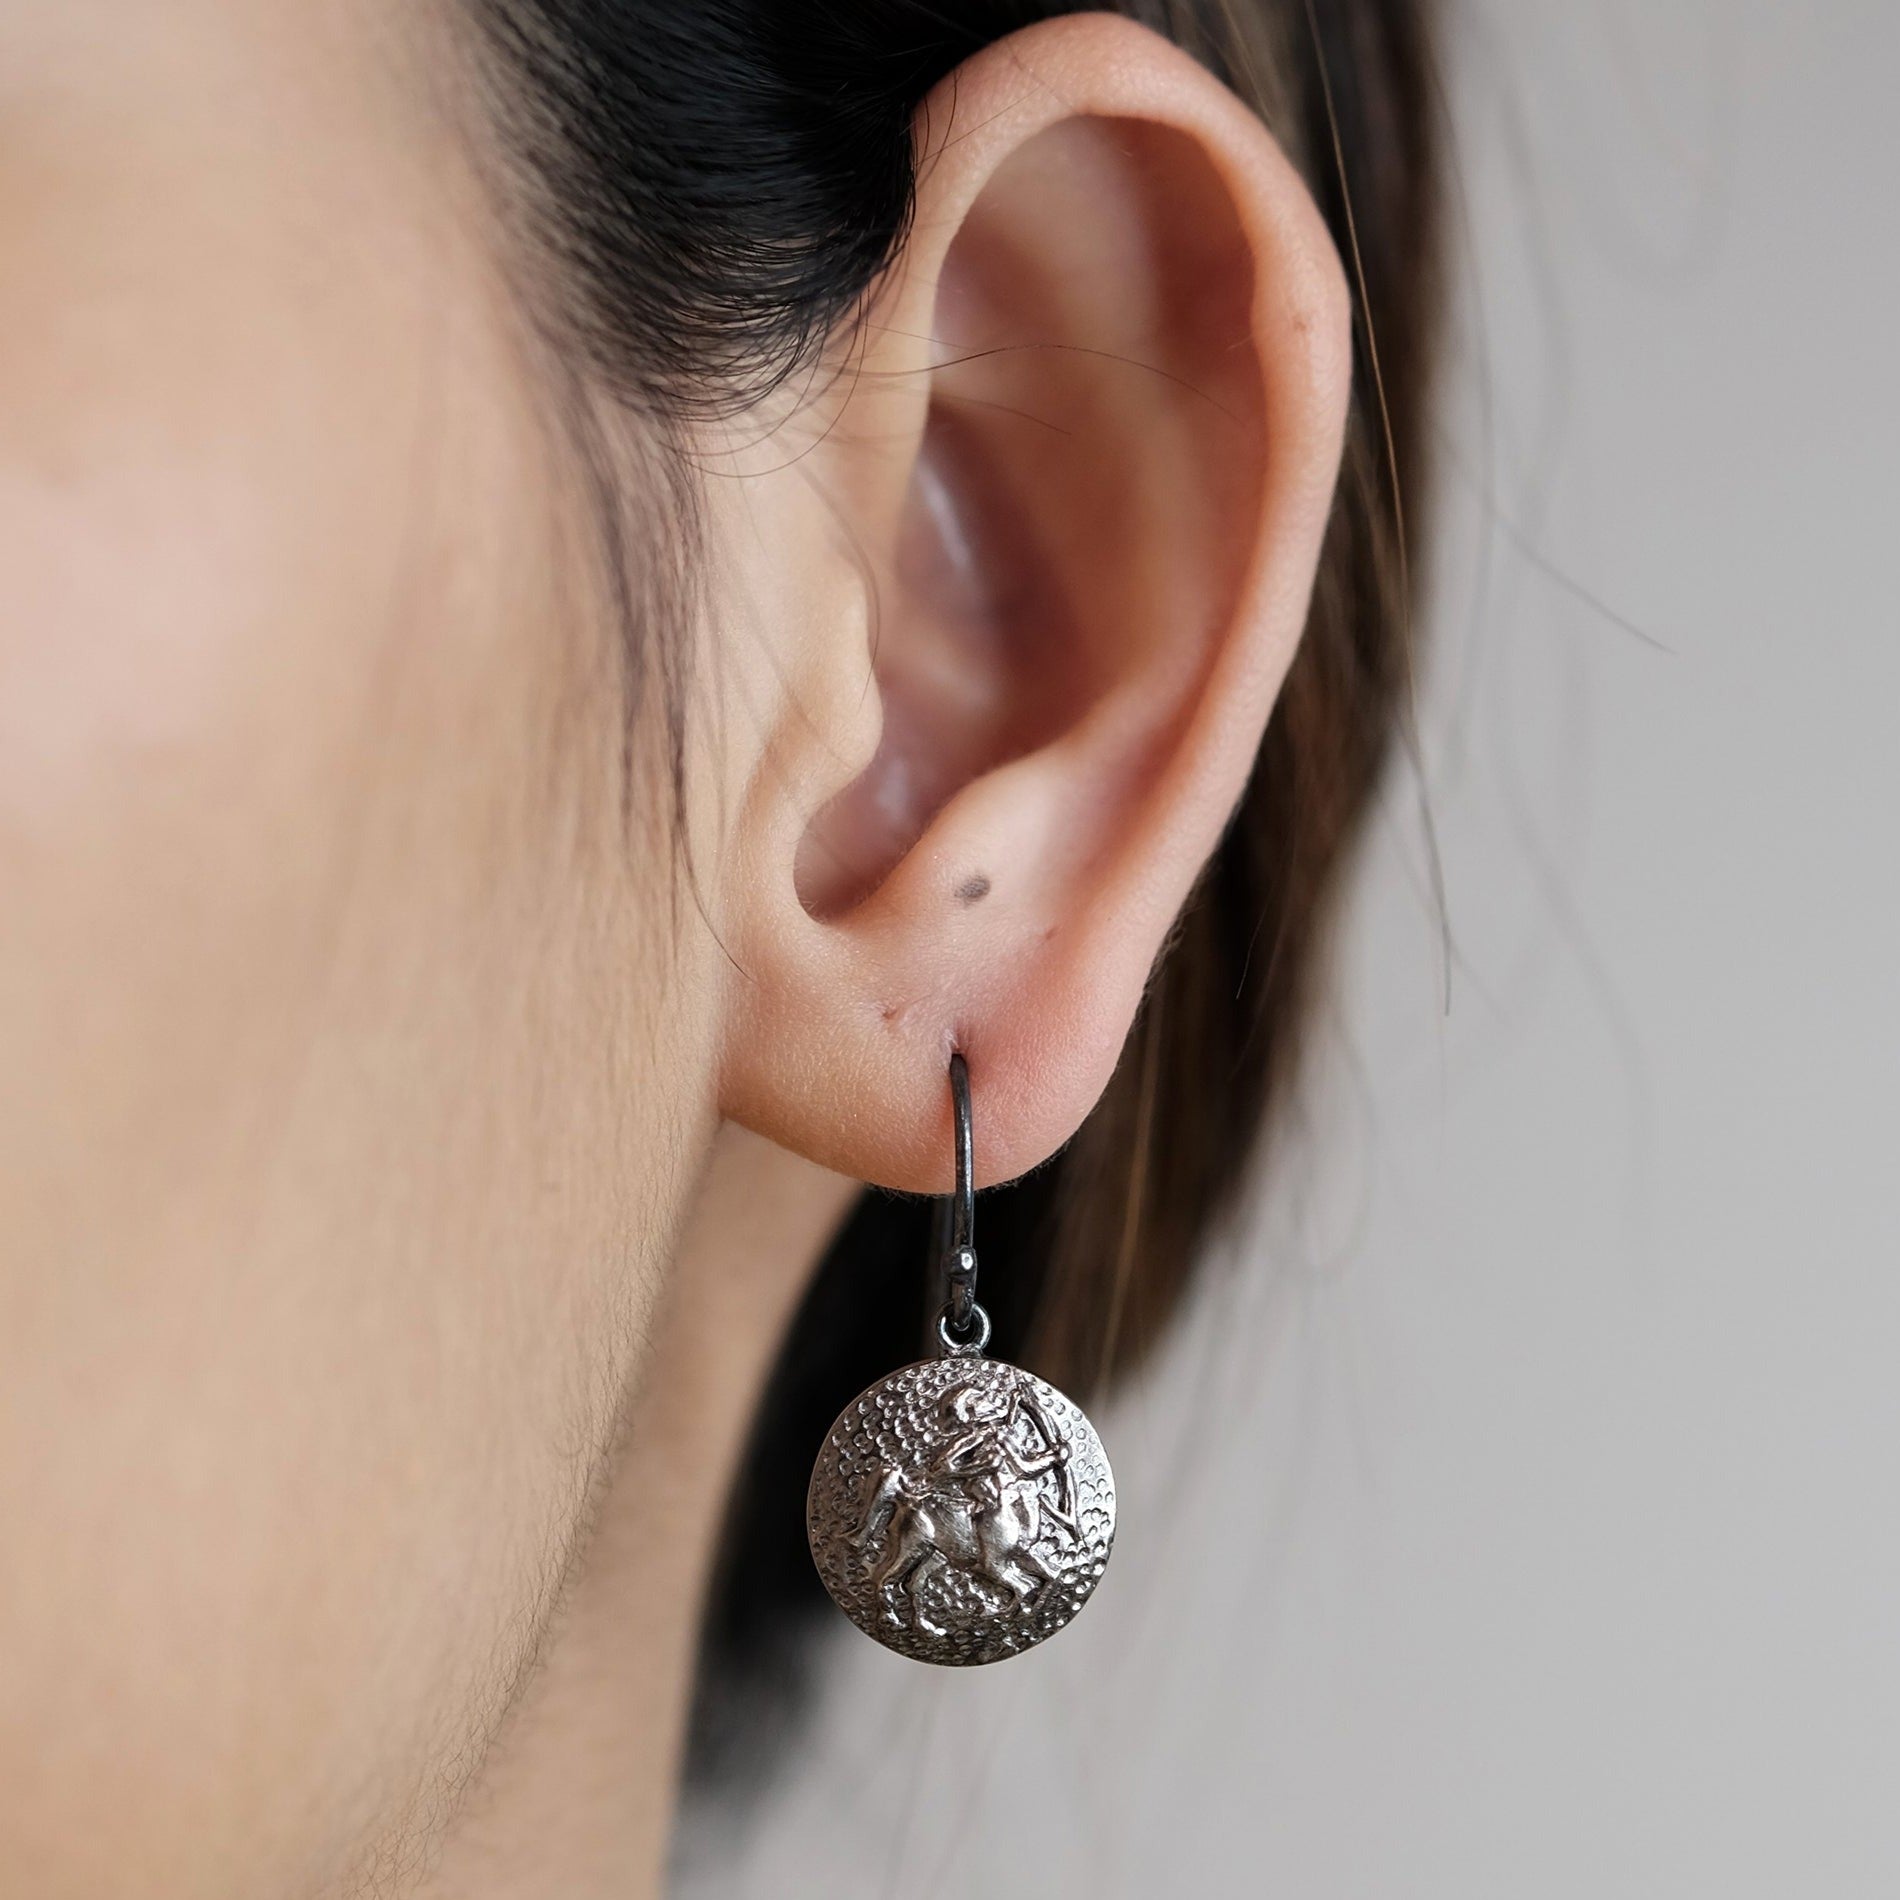 The Madstone Sagittarius earrings